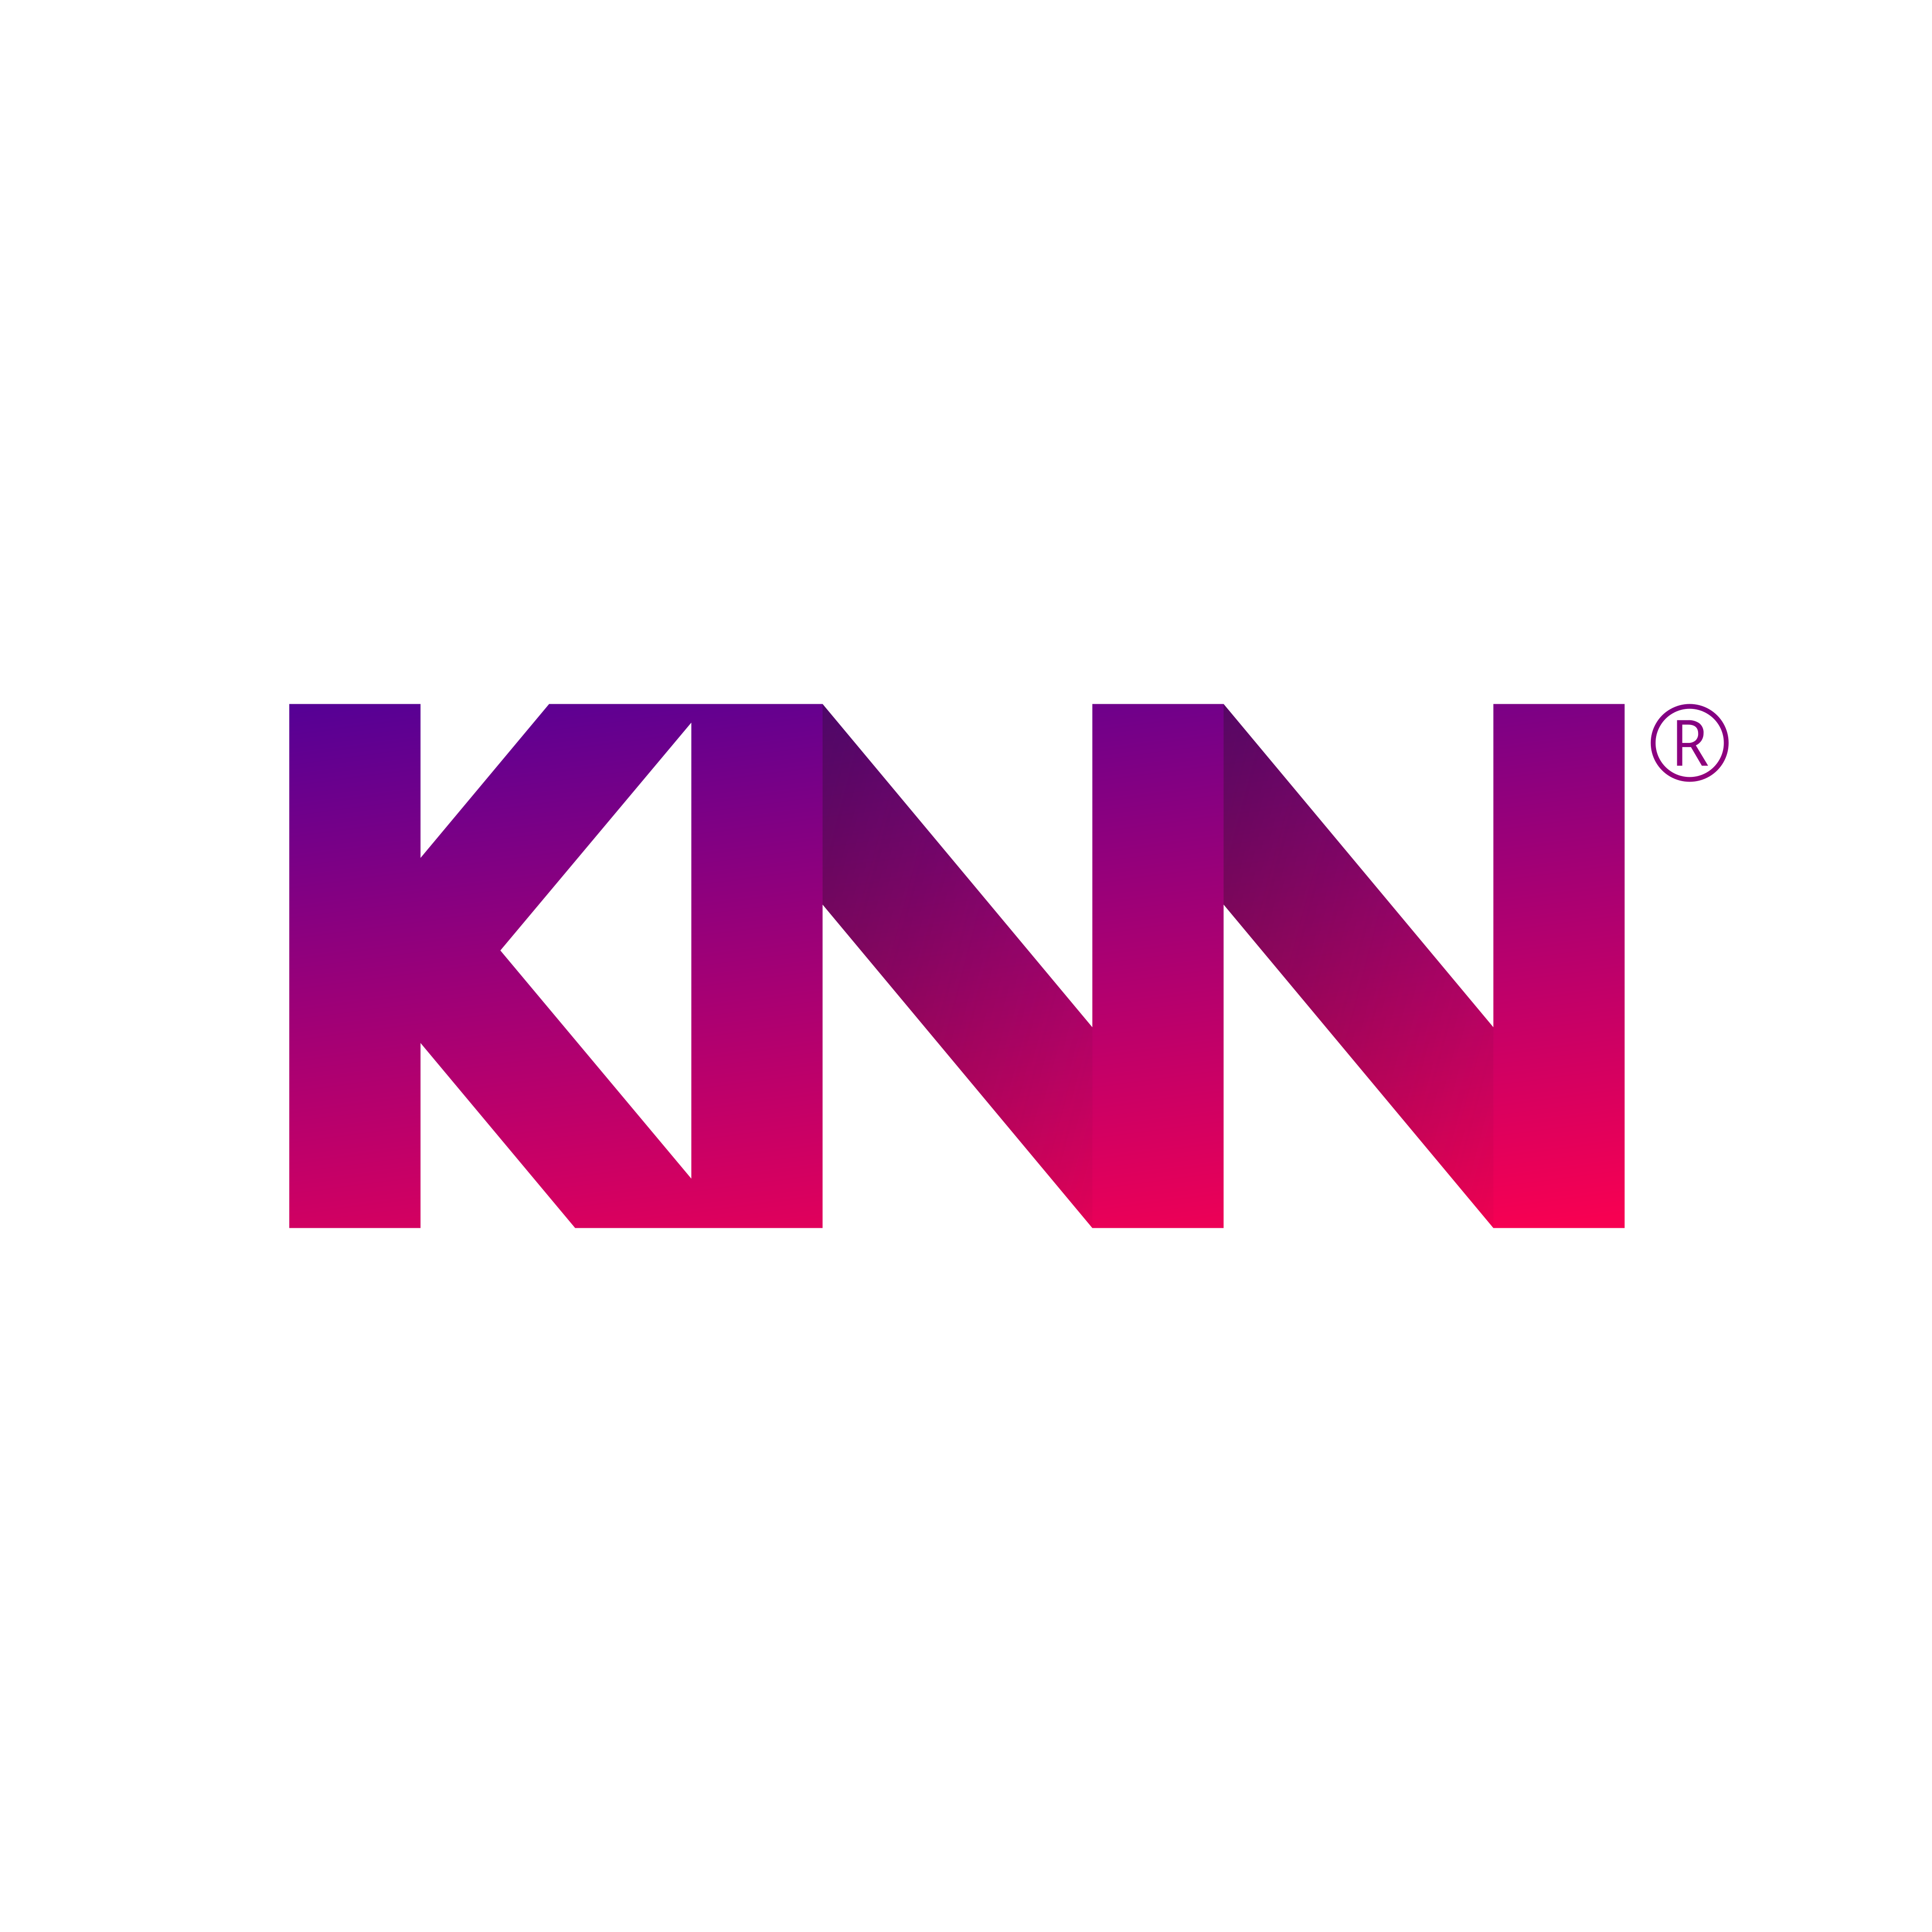 KNN Idiomas Logo PNG.